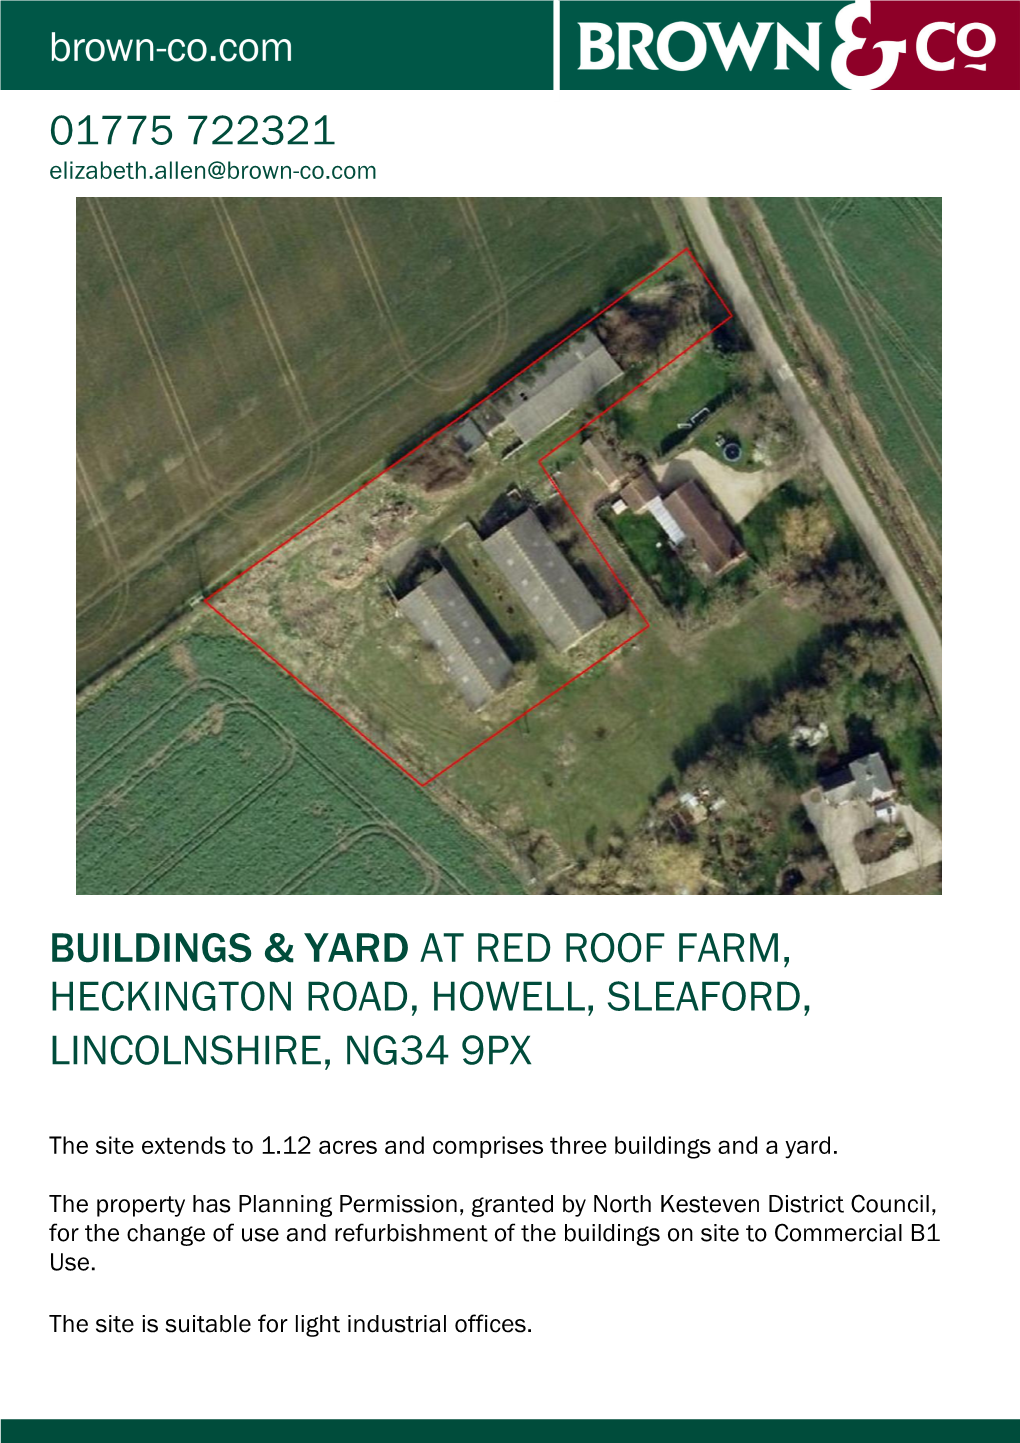 Buildings & Yard at Red Roof Farm, Heckington Road